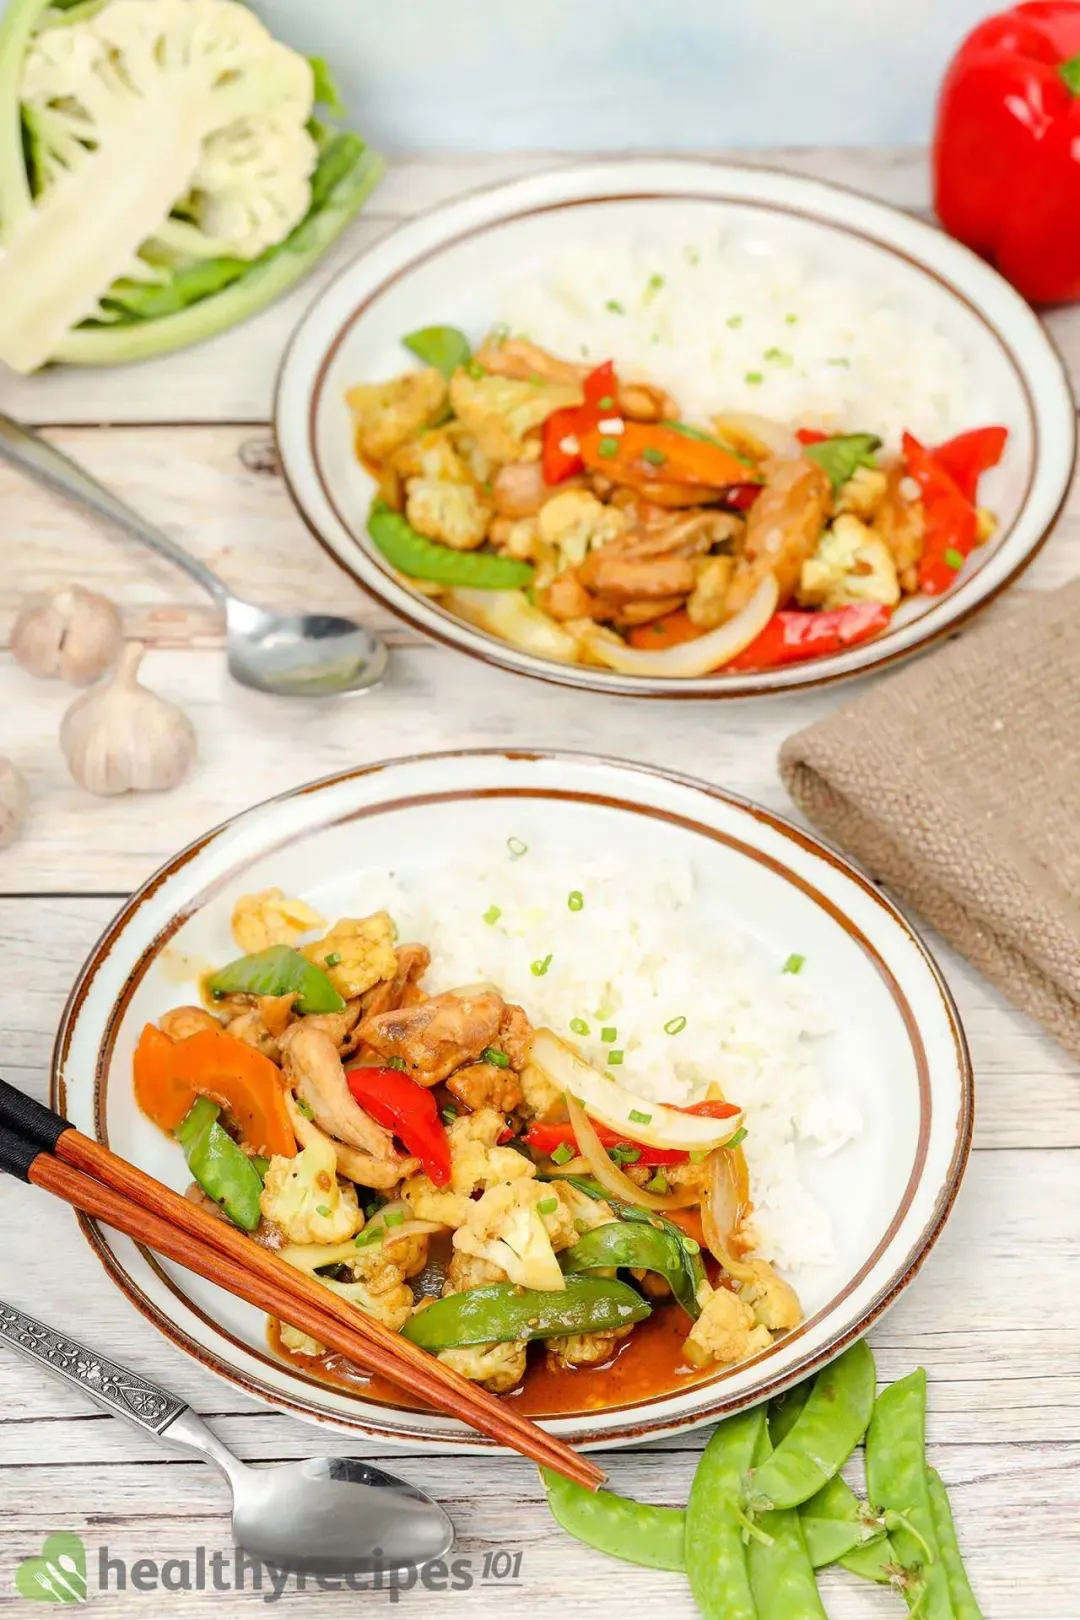 What to Serve with Chicken Chop Suey